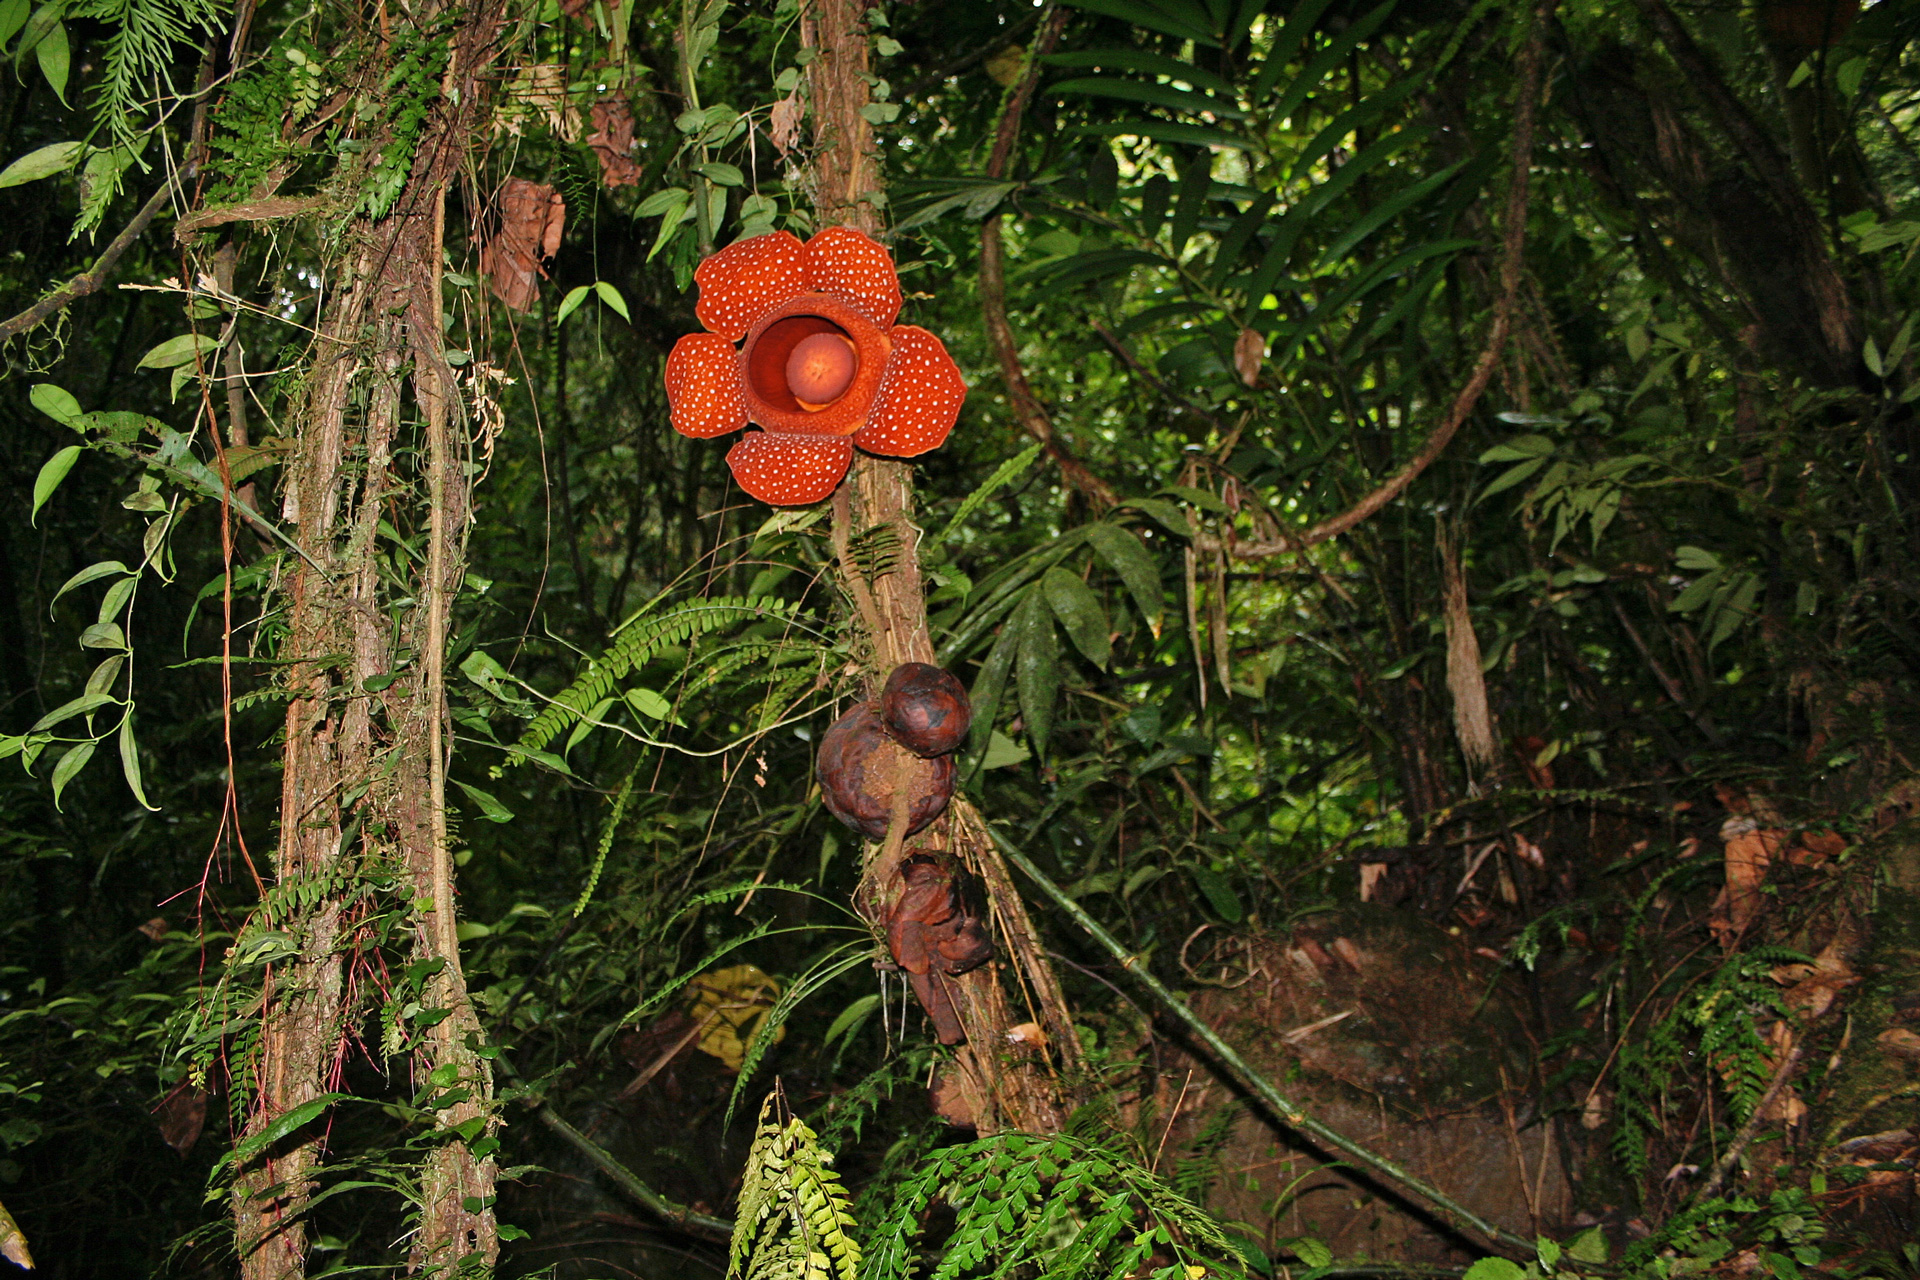 Flowers and flower buds of Rafflesia leonardi emerging from a host vine